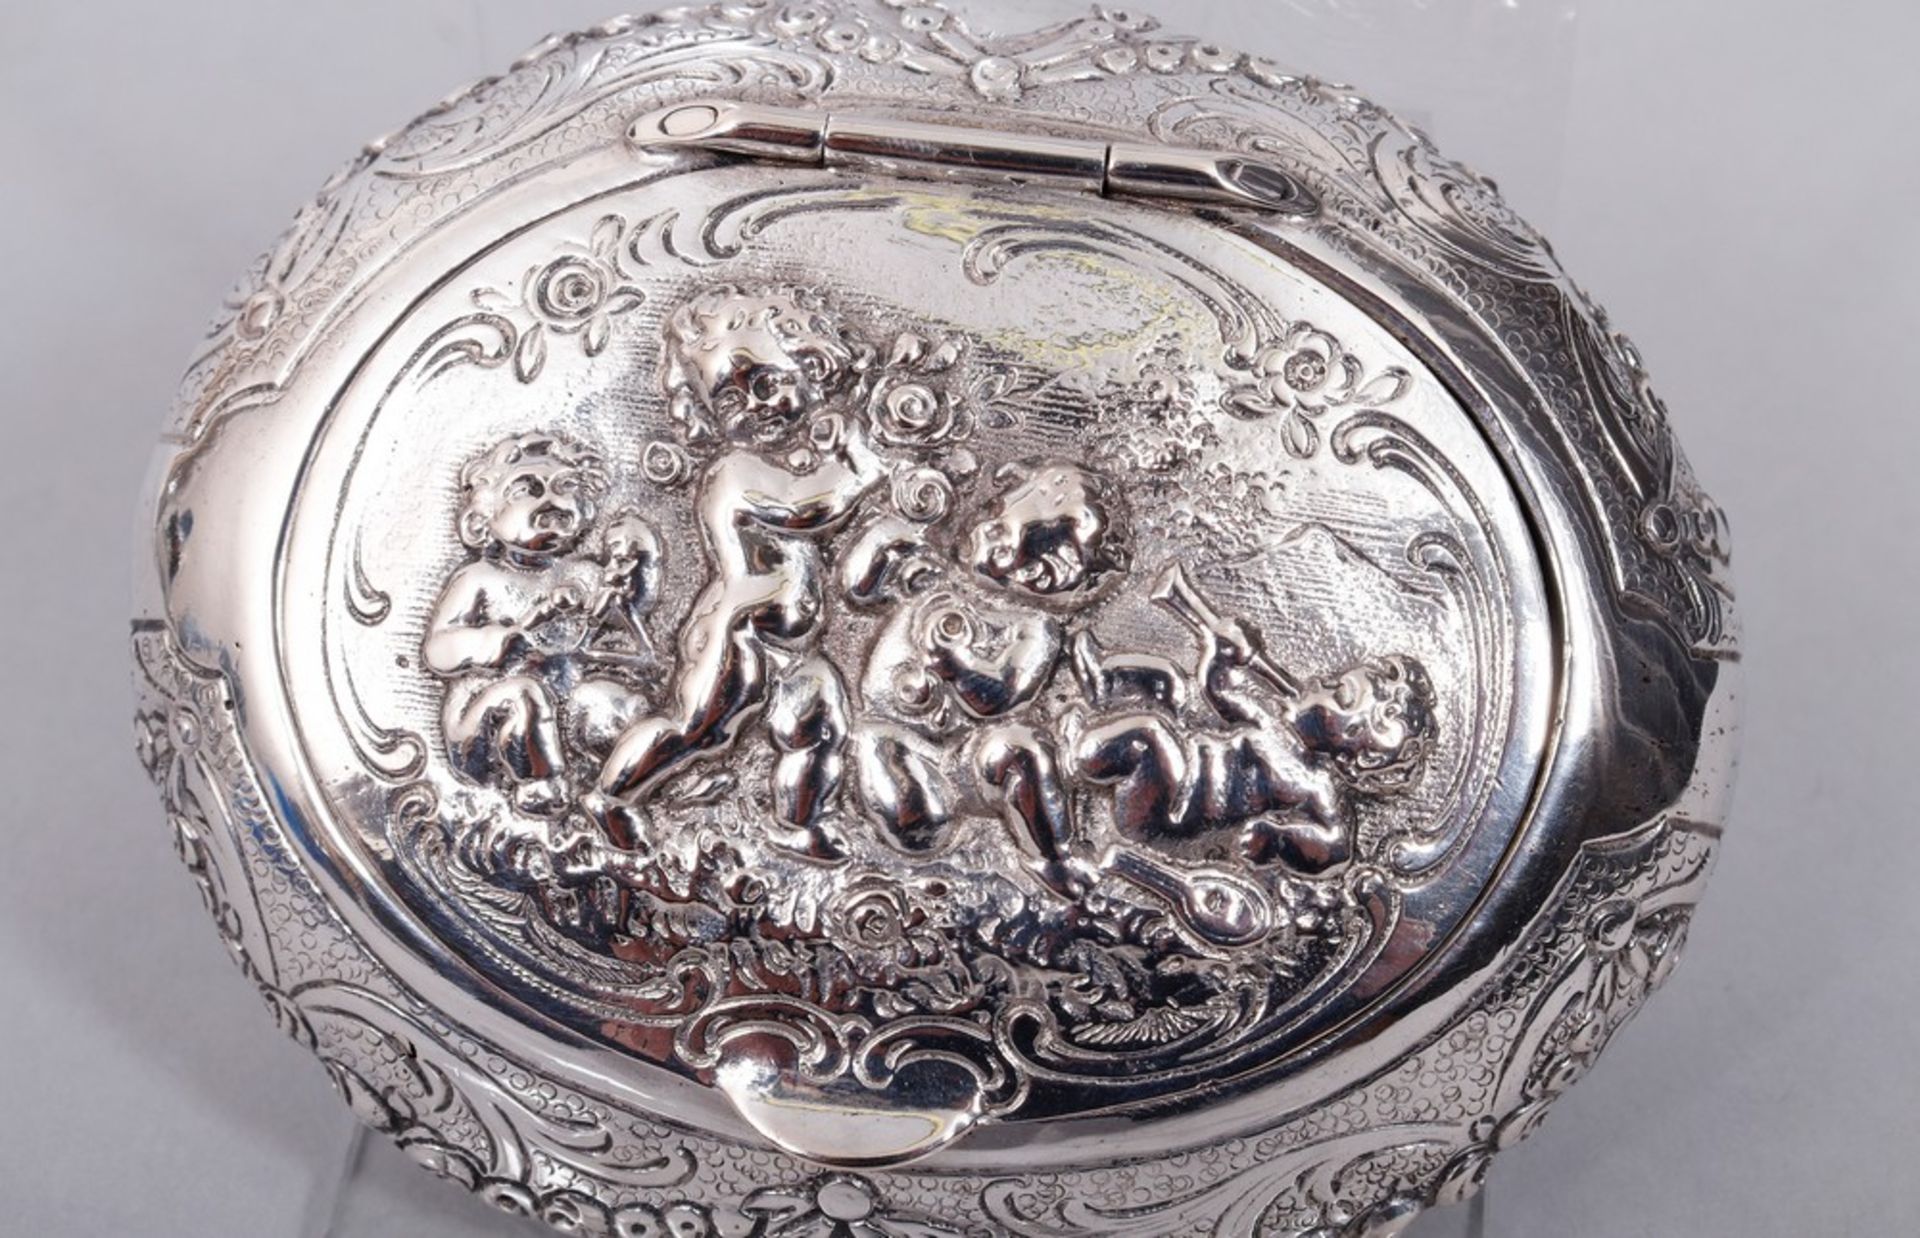 Small snuffbox, 800 silver, Robbe & Berking, Flensburg, c. 1900 - Image 2 of 5